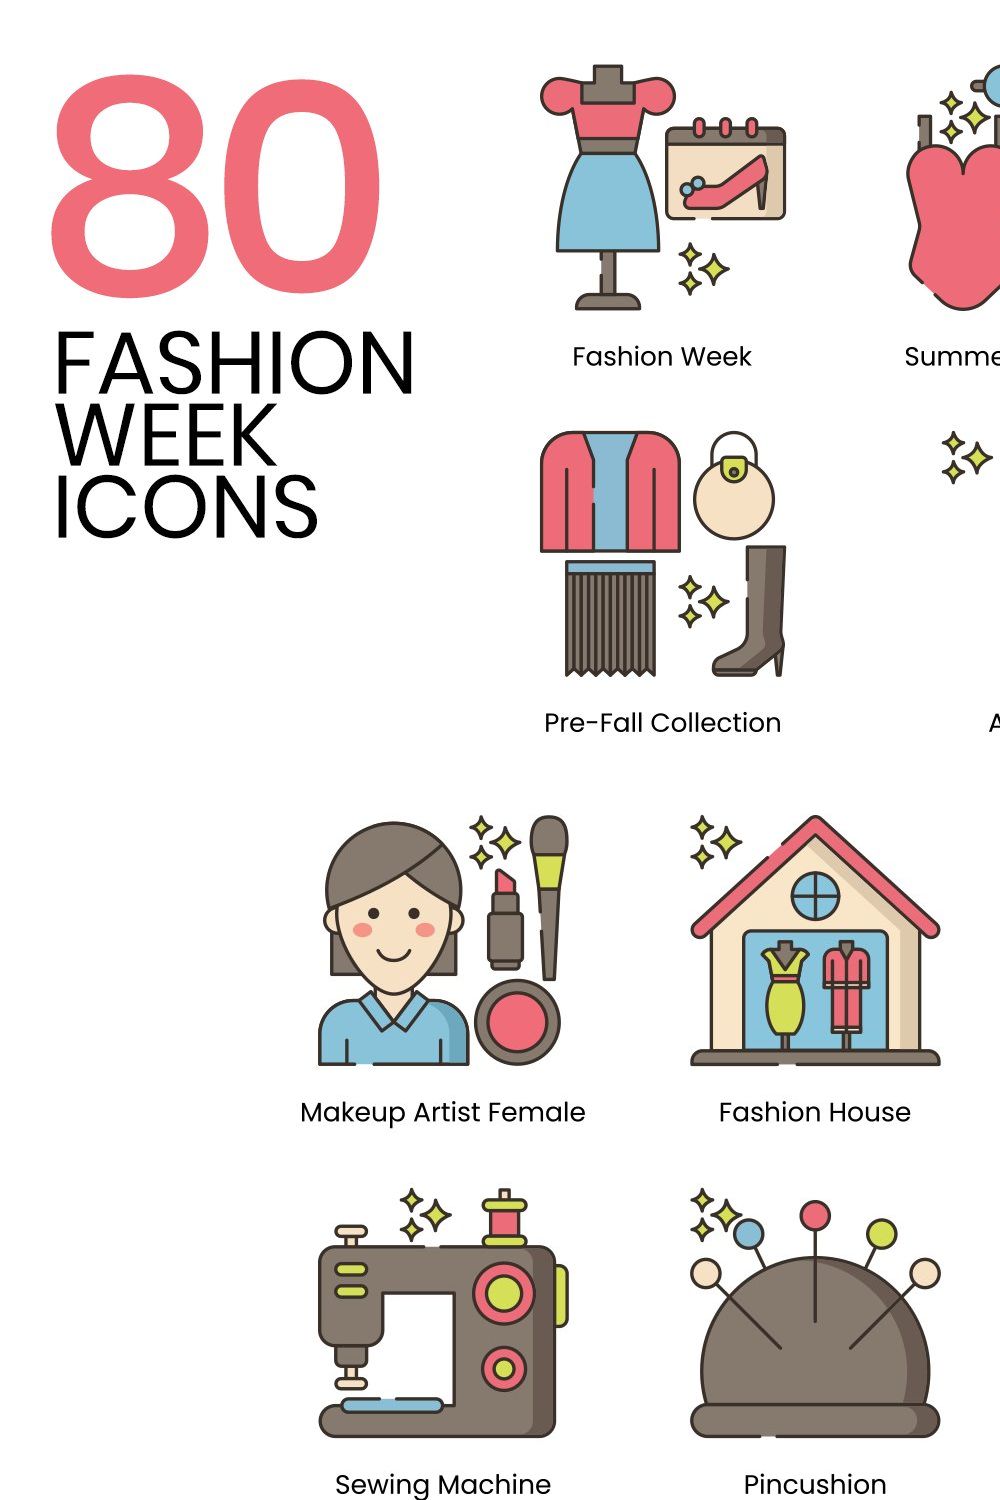 80 Fashion Week Icons - Hazel pinterest preview image.